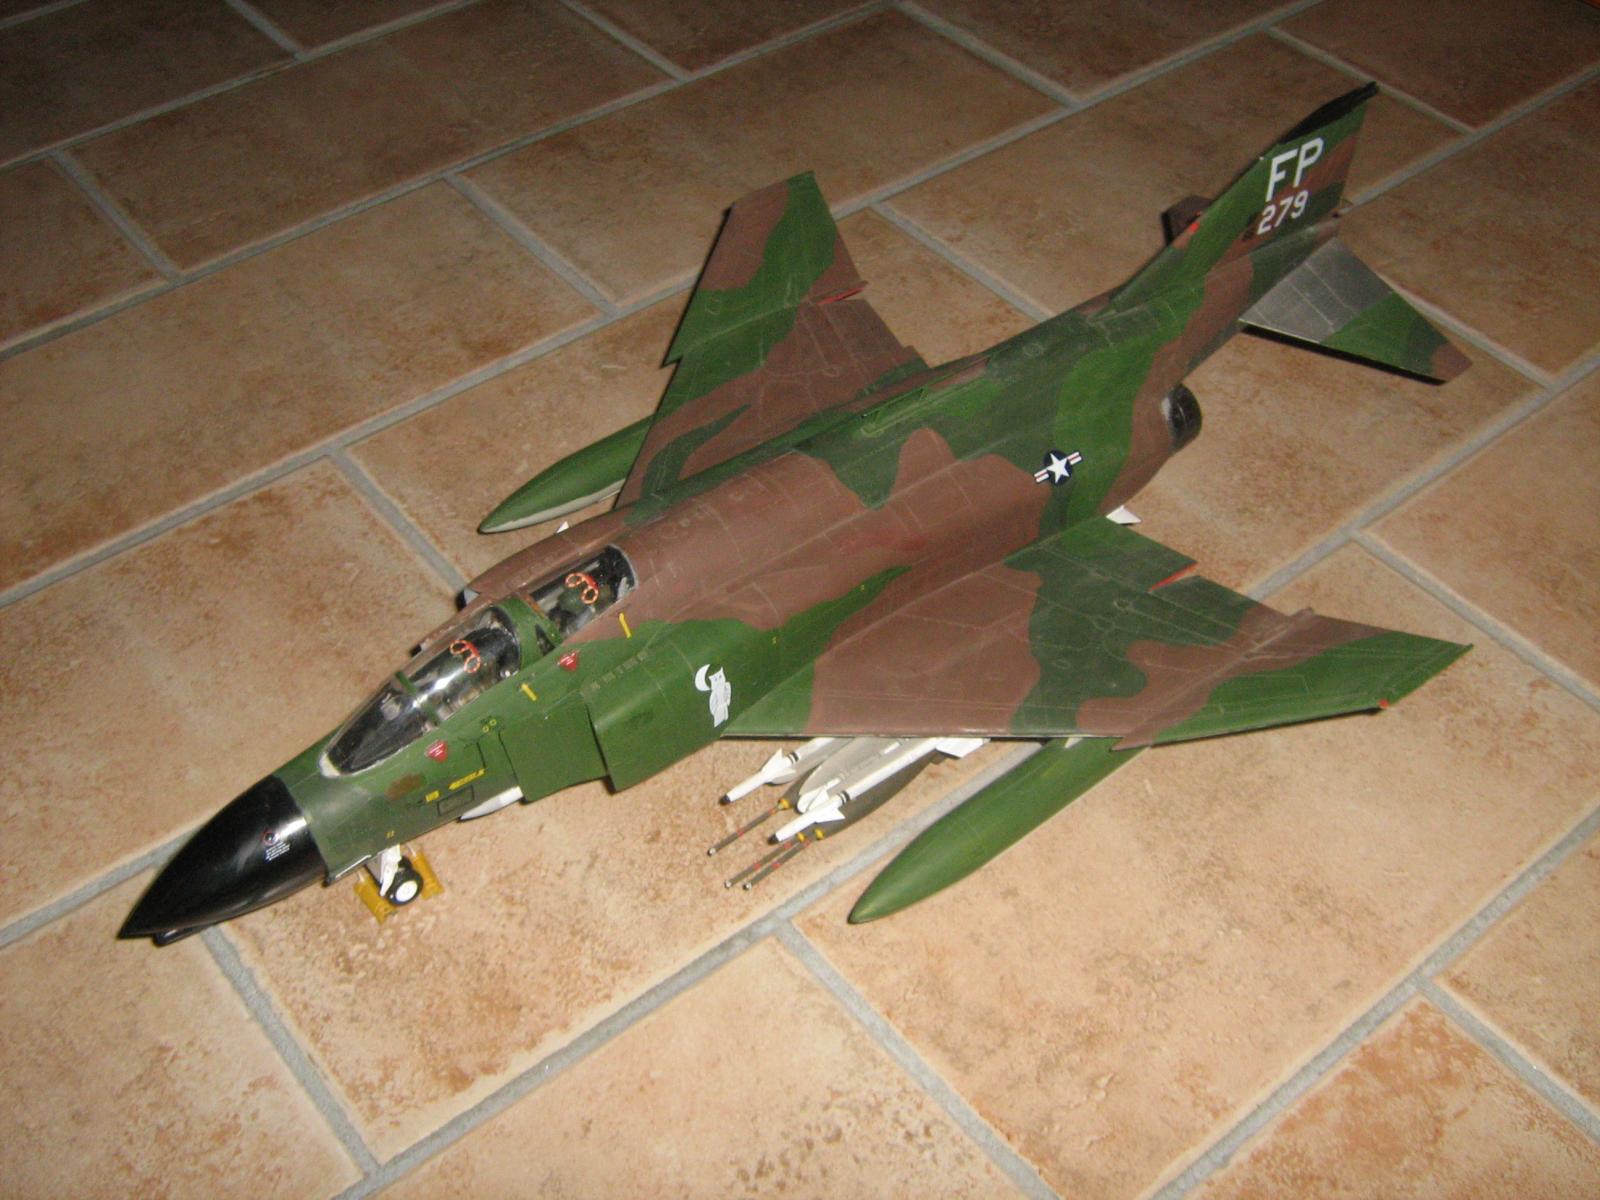  F-4D Phantom II " TERRIBLE TYKE" 497th TFS, 8th TFW; Ubon 1972(da interdizione notturna)